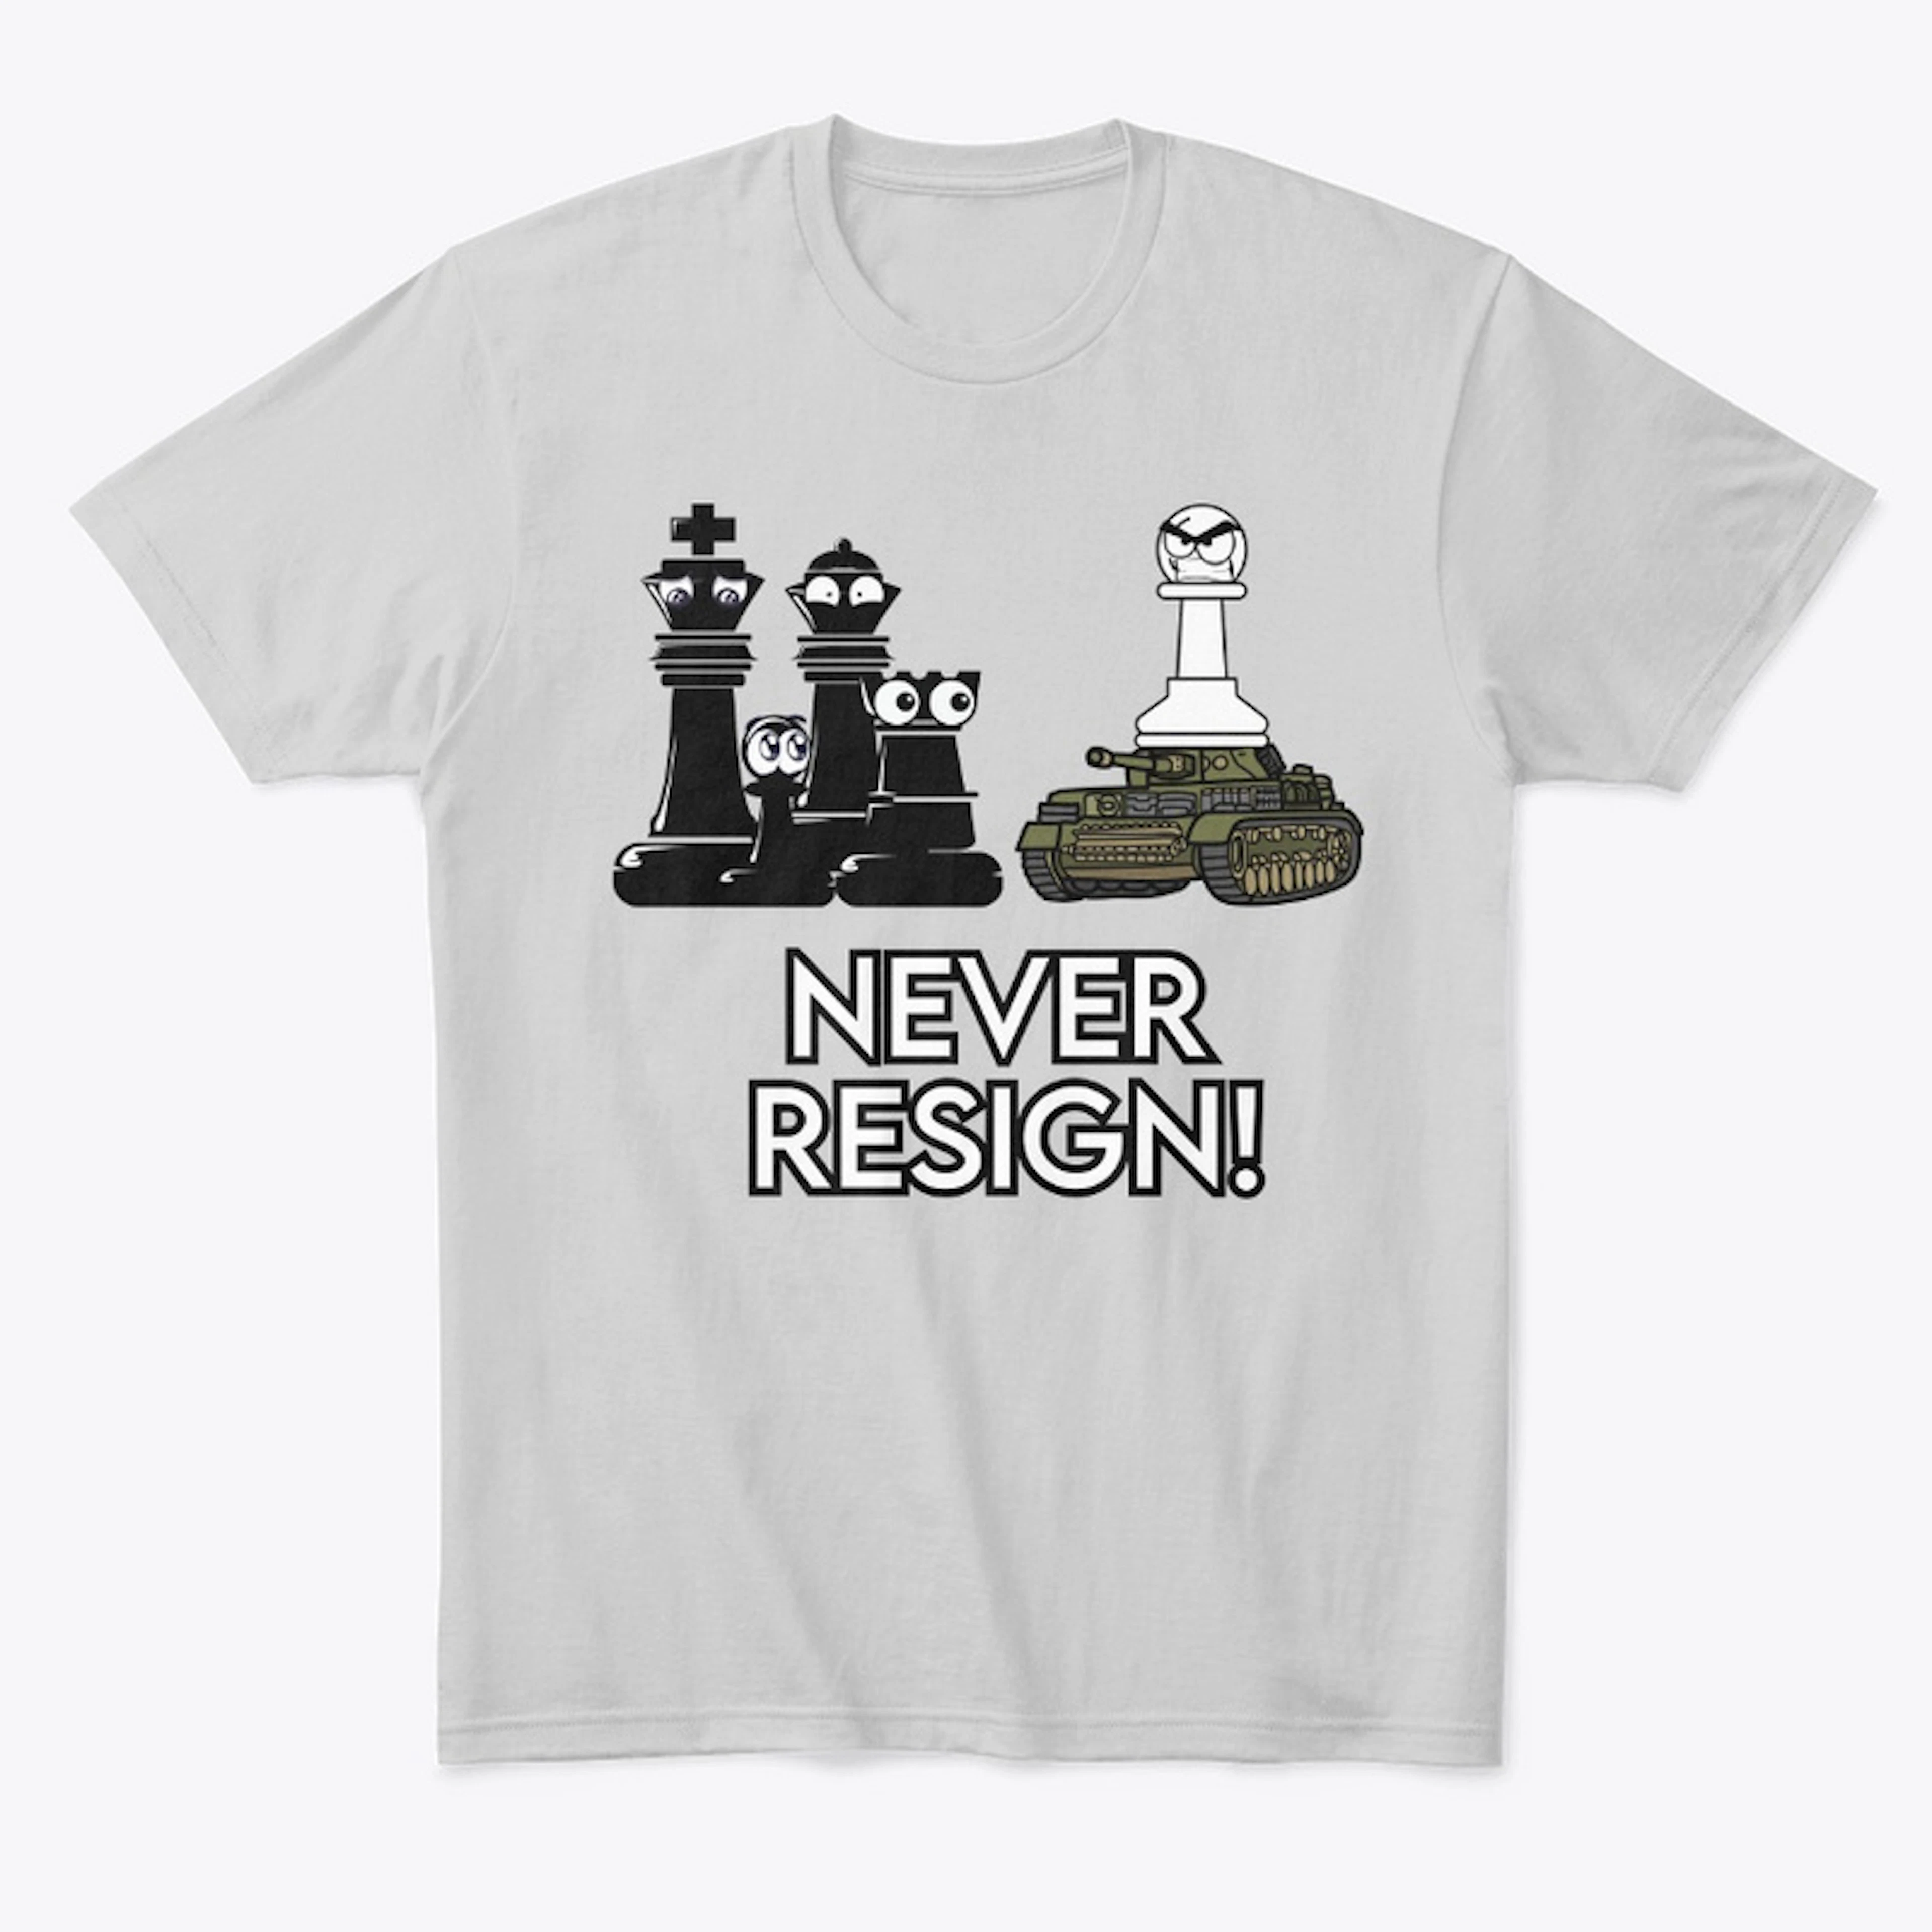 Never Resign in Chess!